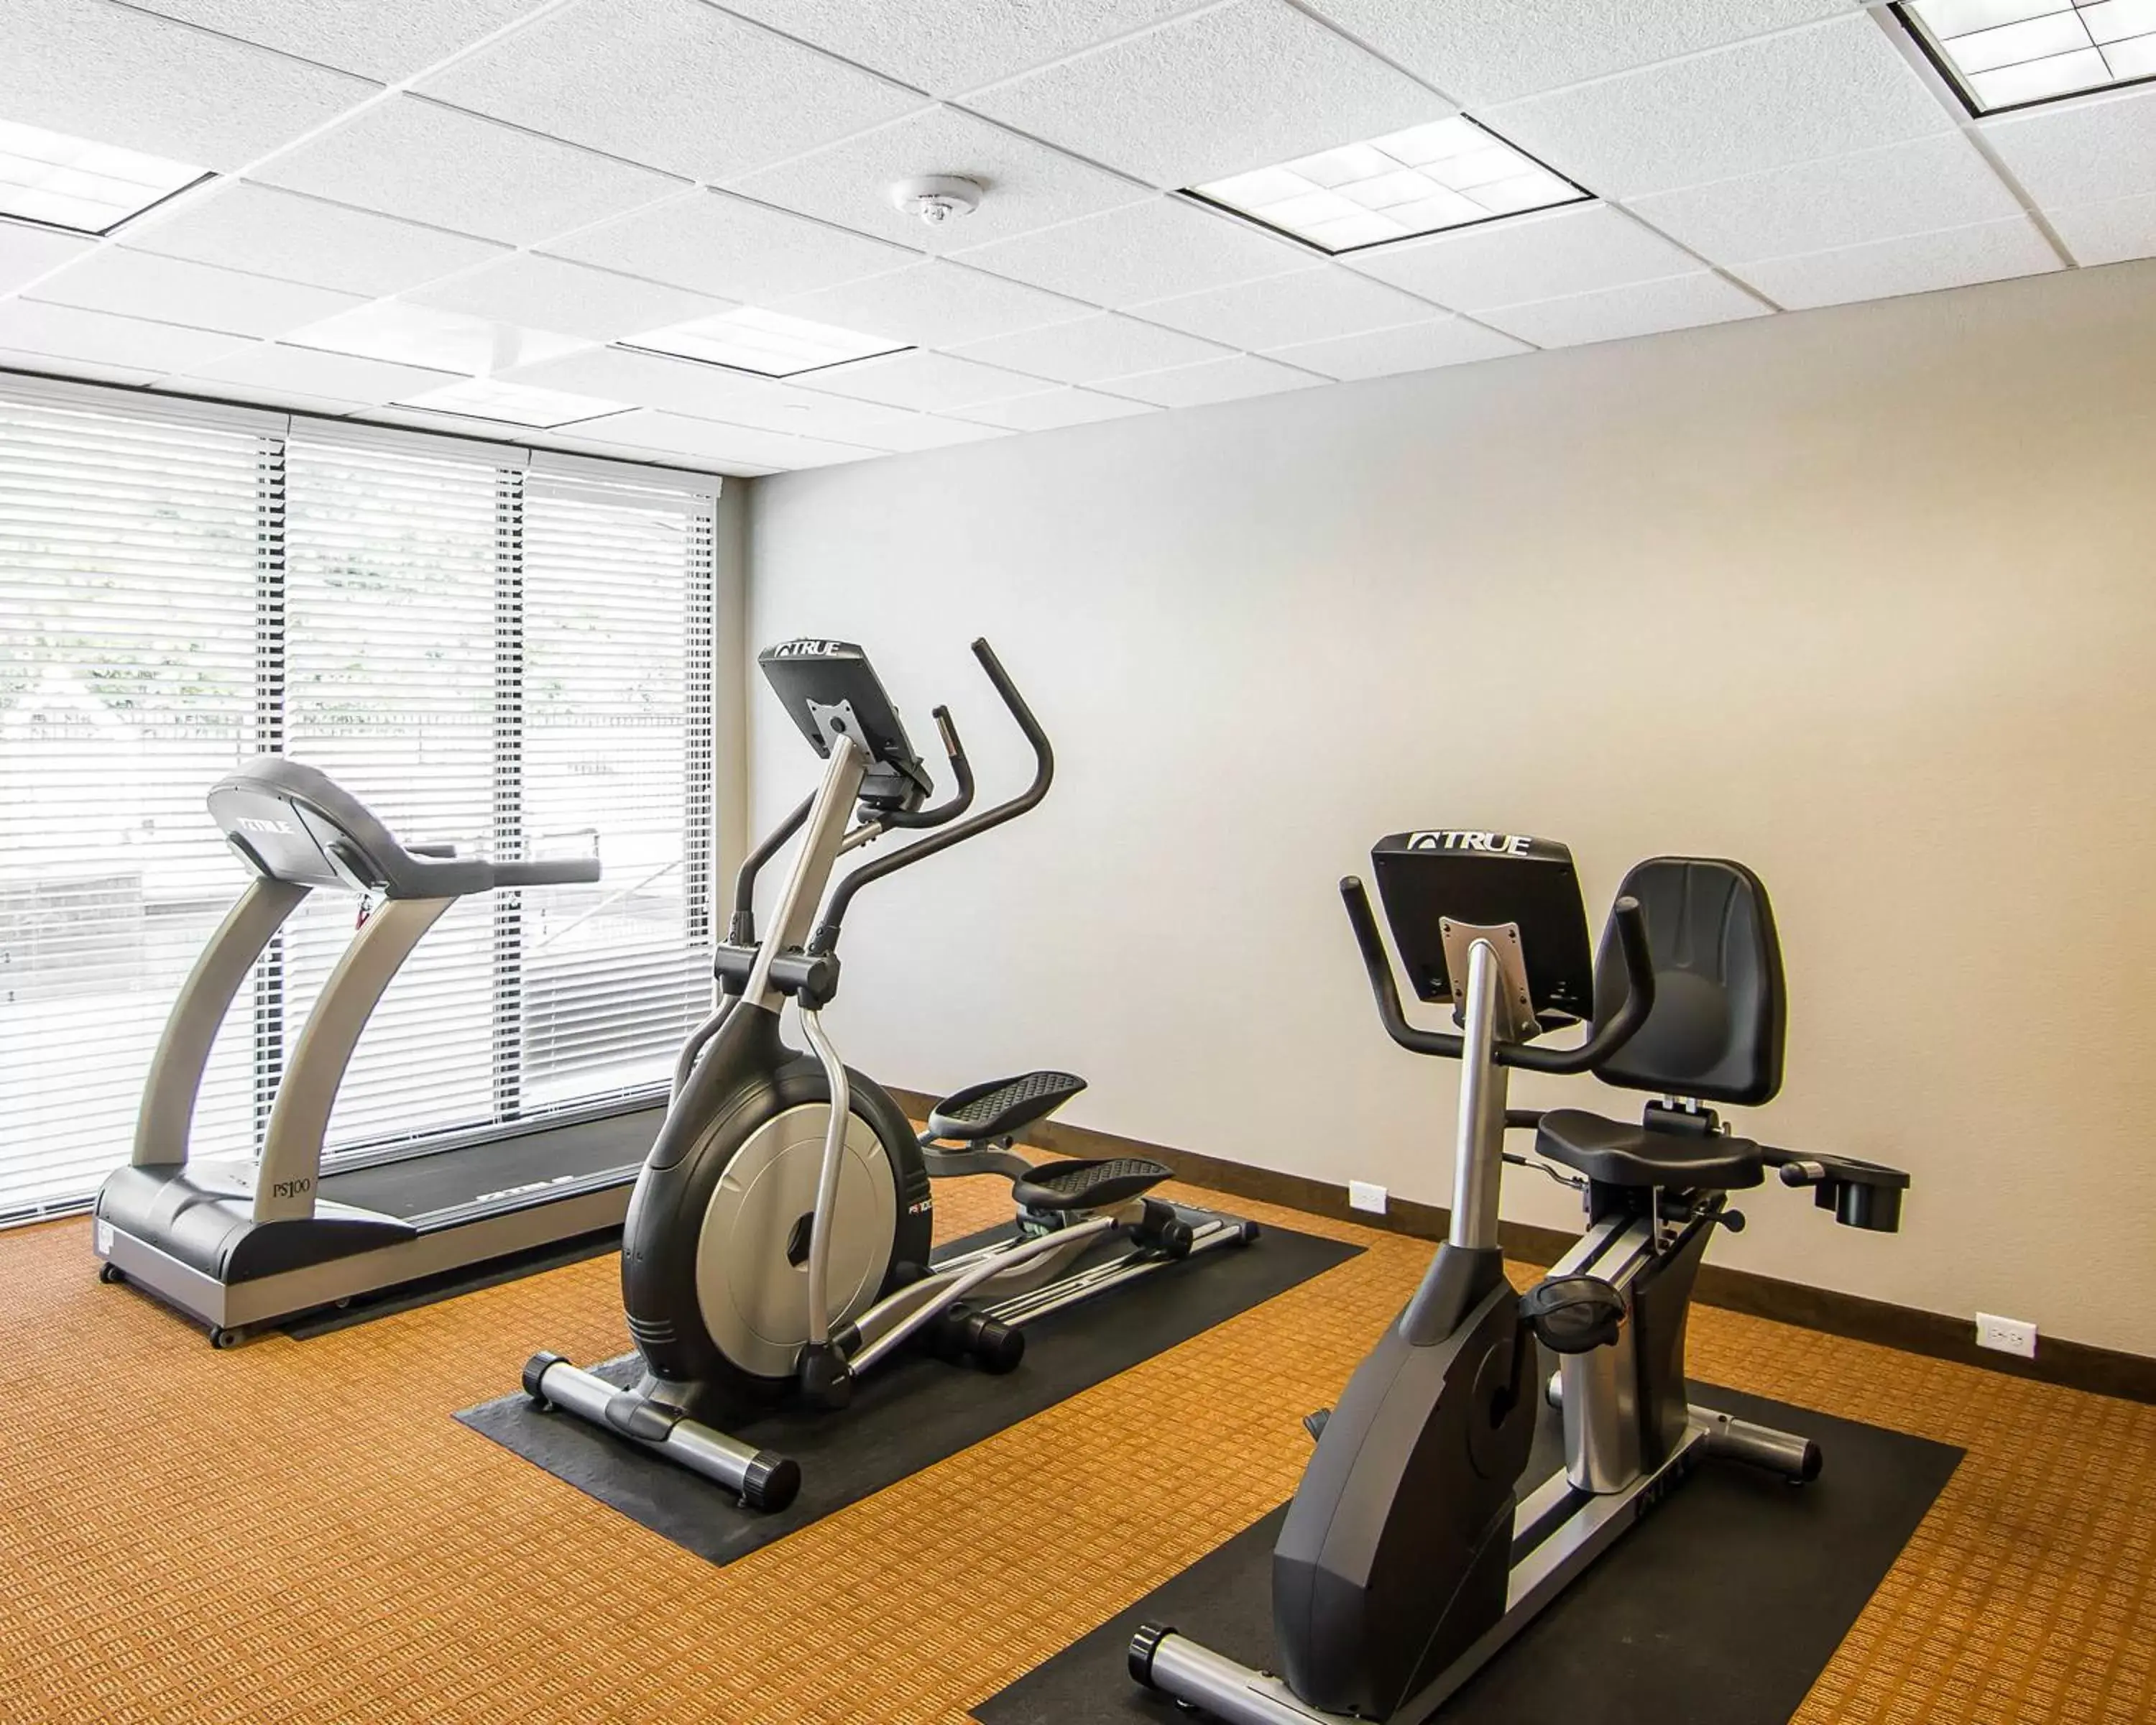 Fitness centre/facilities, Fitness Center/Facilities in Sleep Inn Lufkin